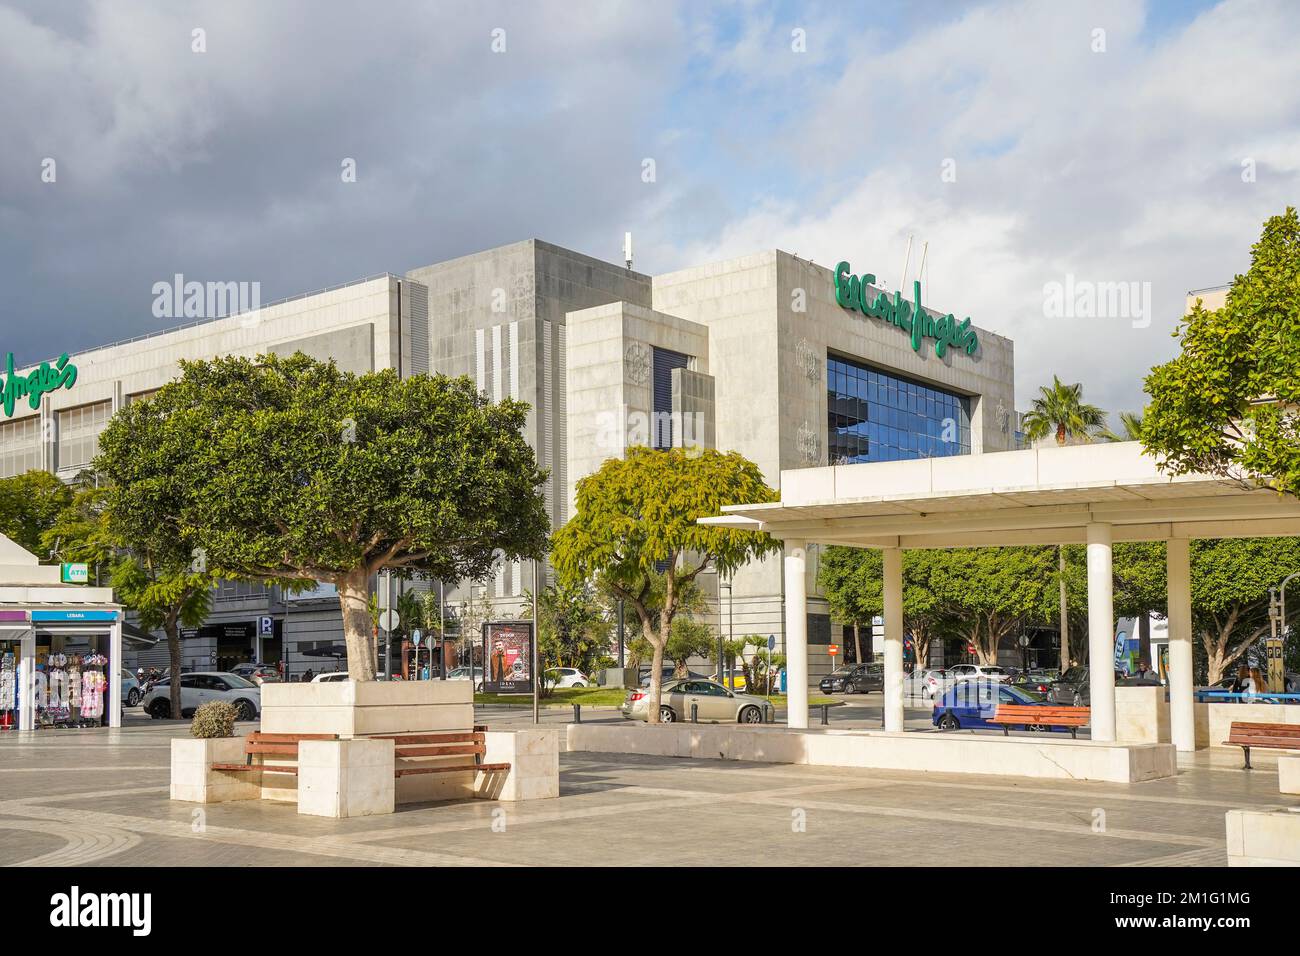 Shopping centre El Corte Ingles in Puerto Banus, Marbella, Costa del Sol, Spain. Stock Photo